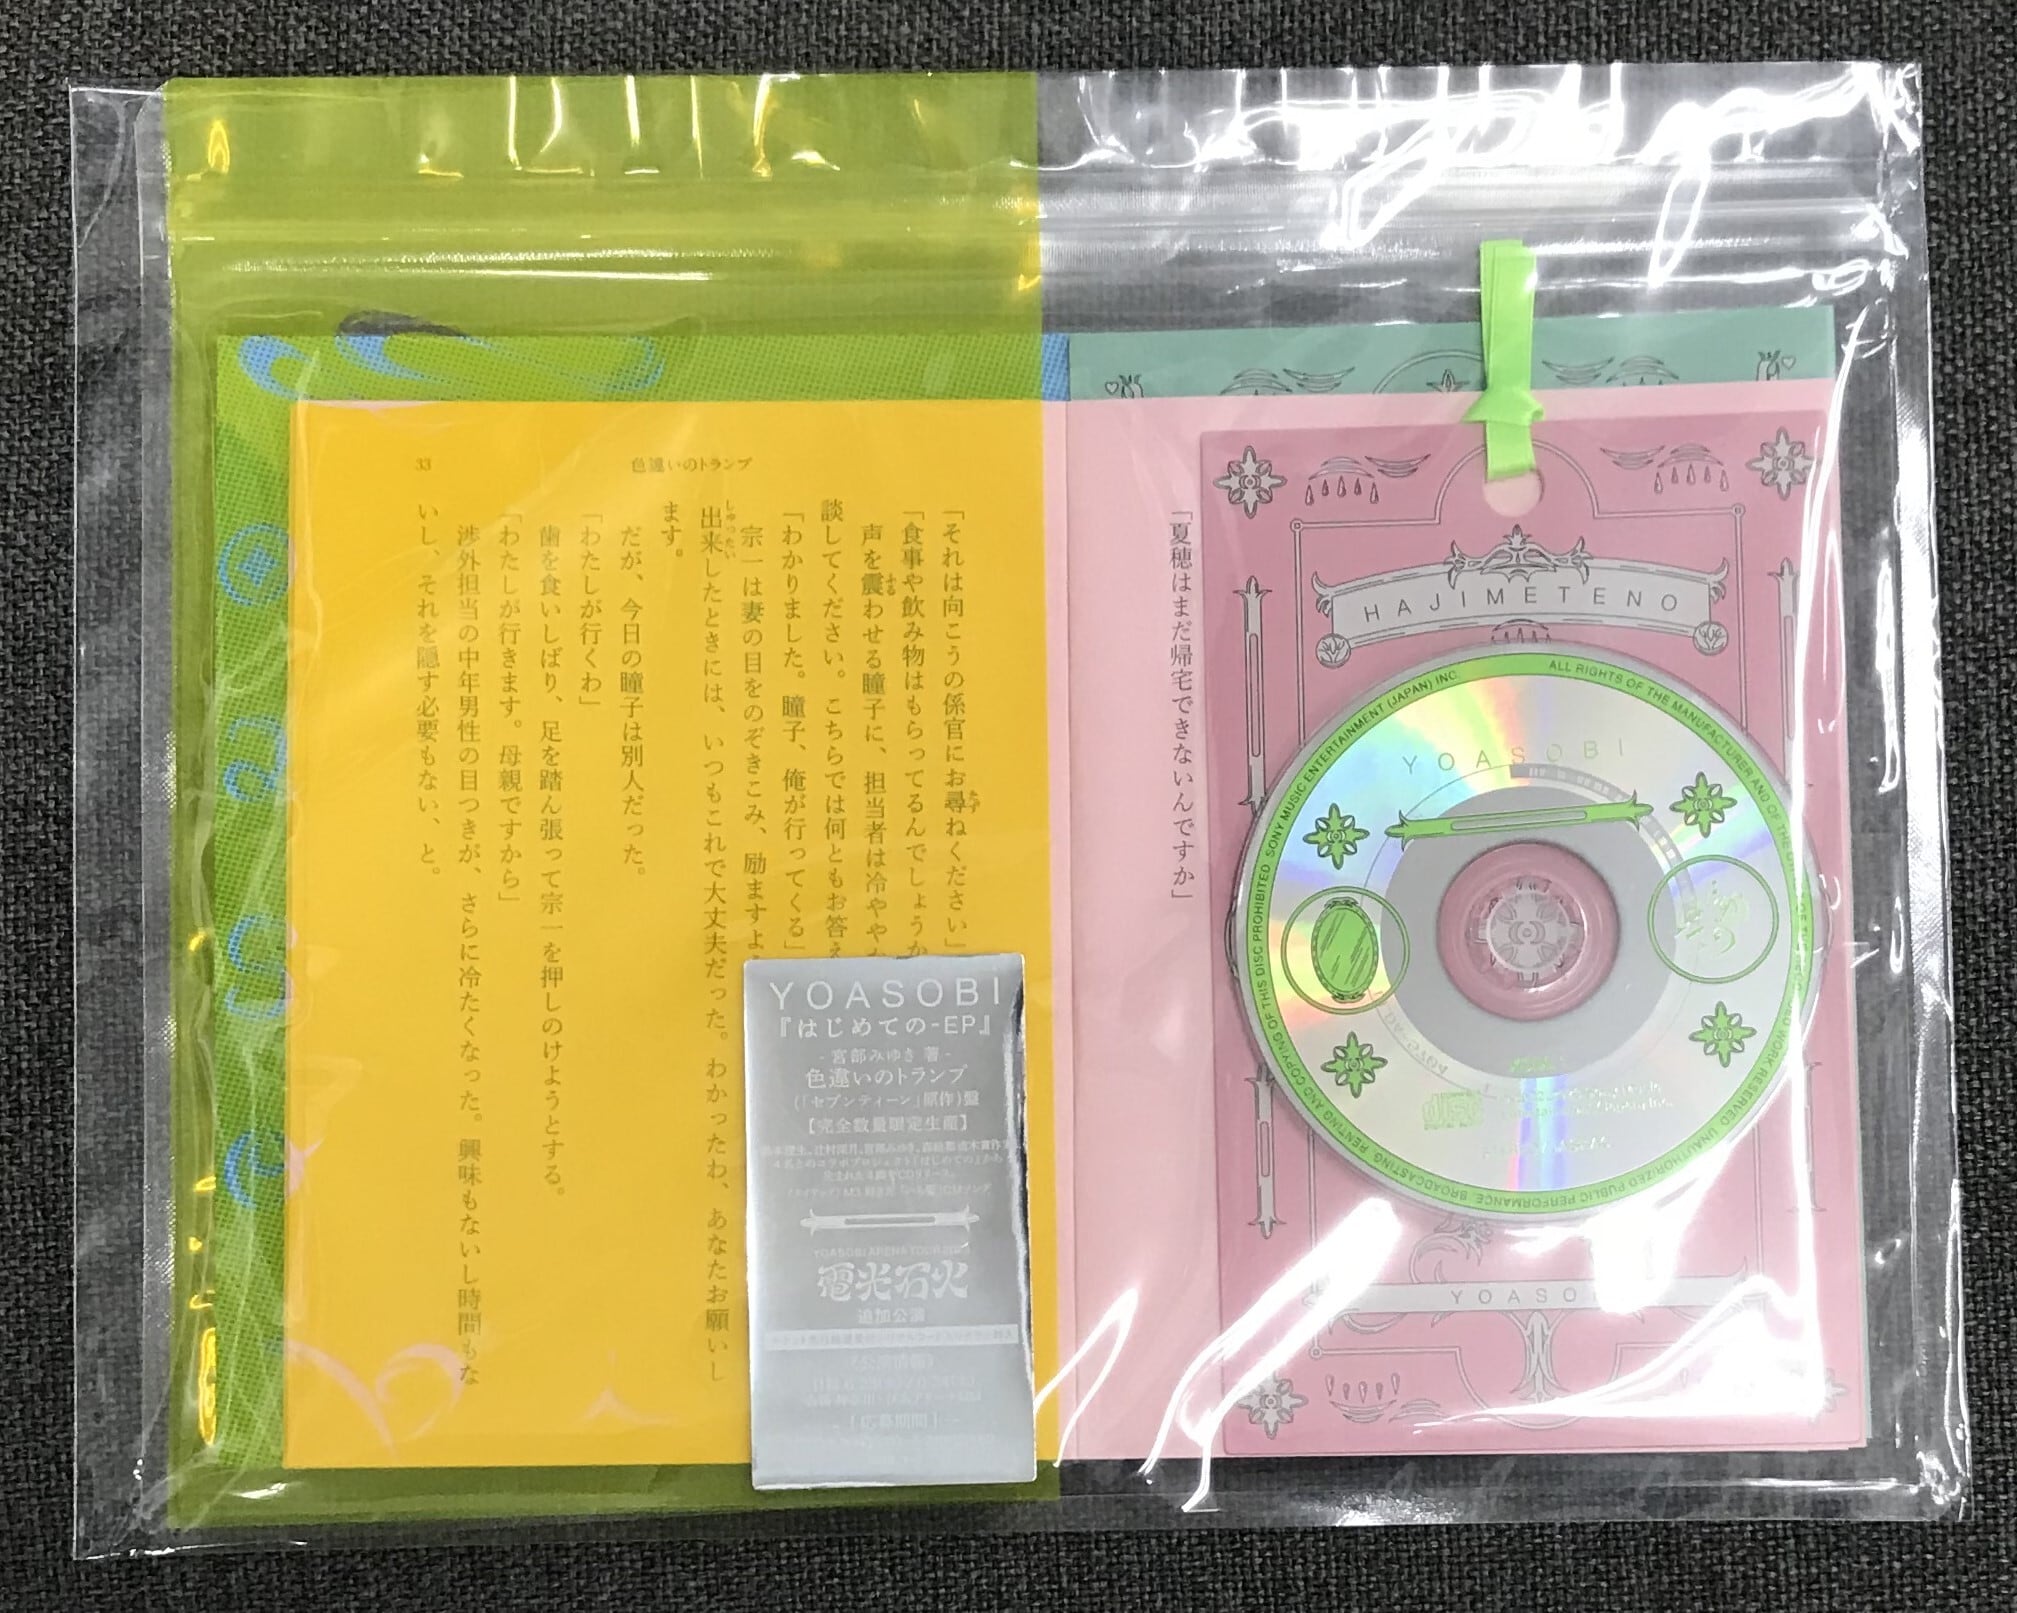 YOASOBI「THE BOOK」〈完全生産限定盤（CD+バインダー）〉